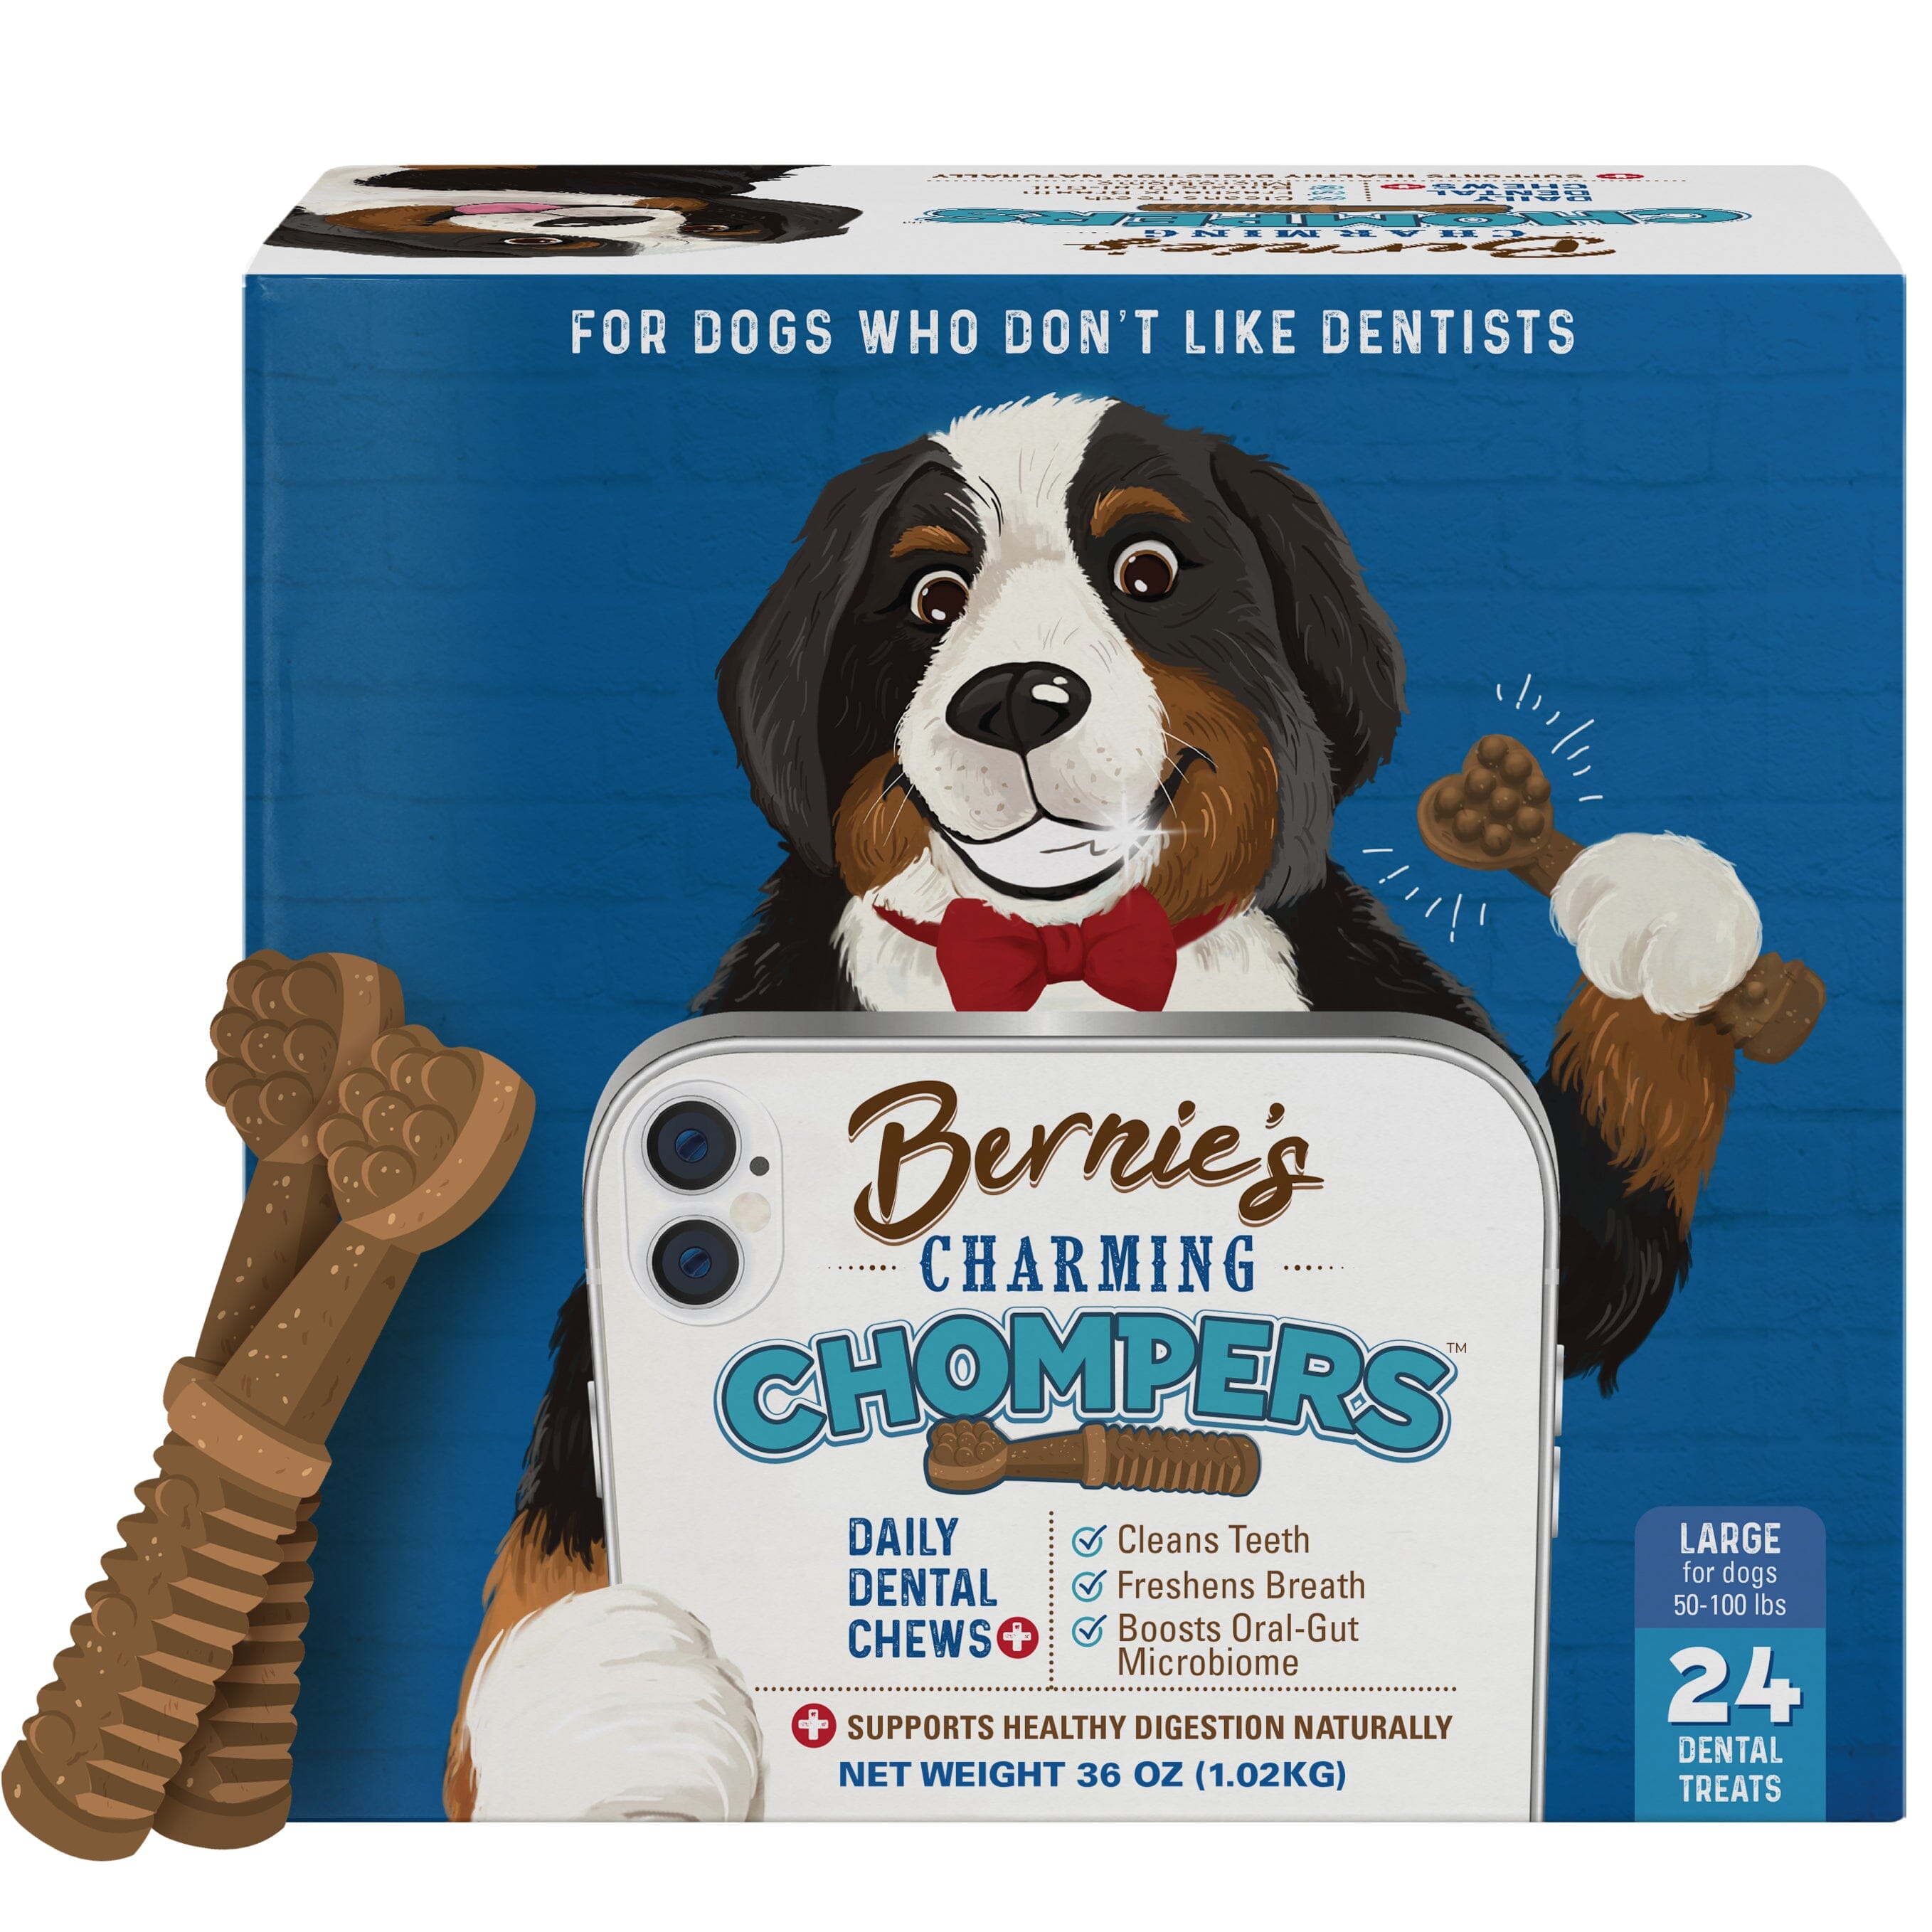 Bernie's Charming Chompers Digestive Supplement Bernie's Best Large Dogs (51-100 lb) 36 oz Box- 24 Count 